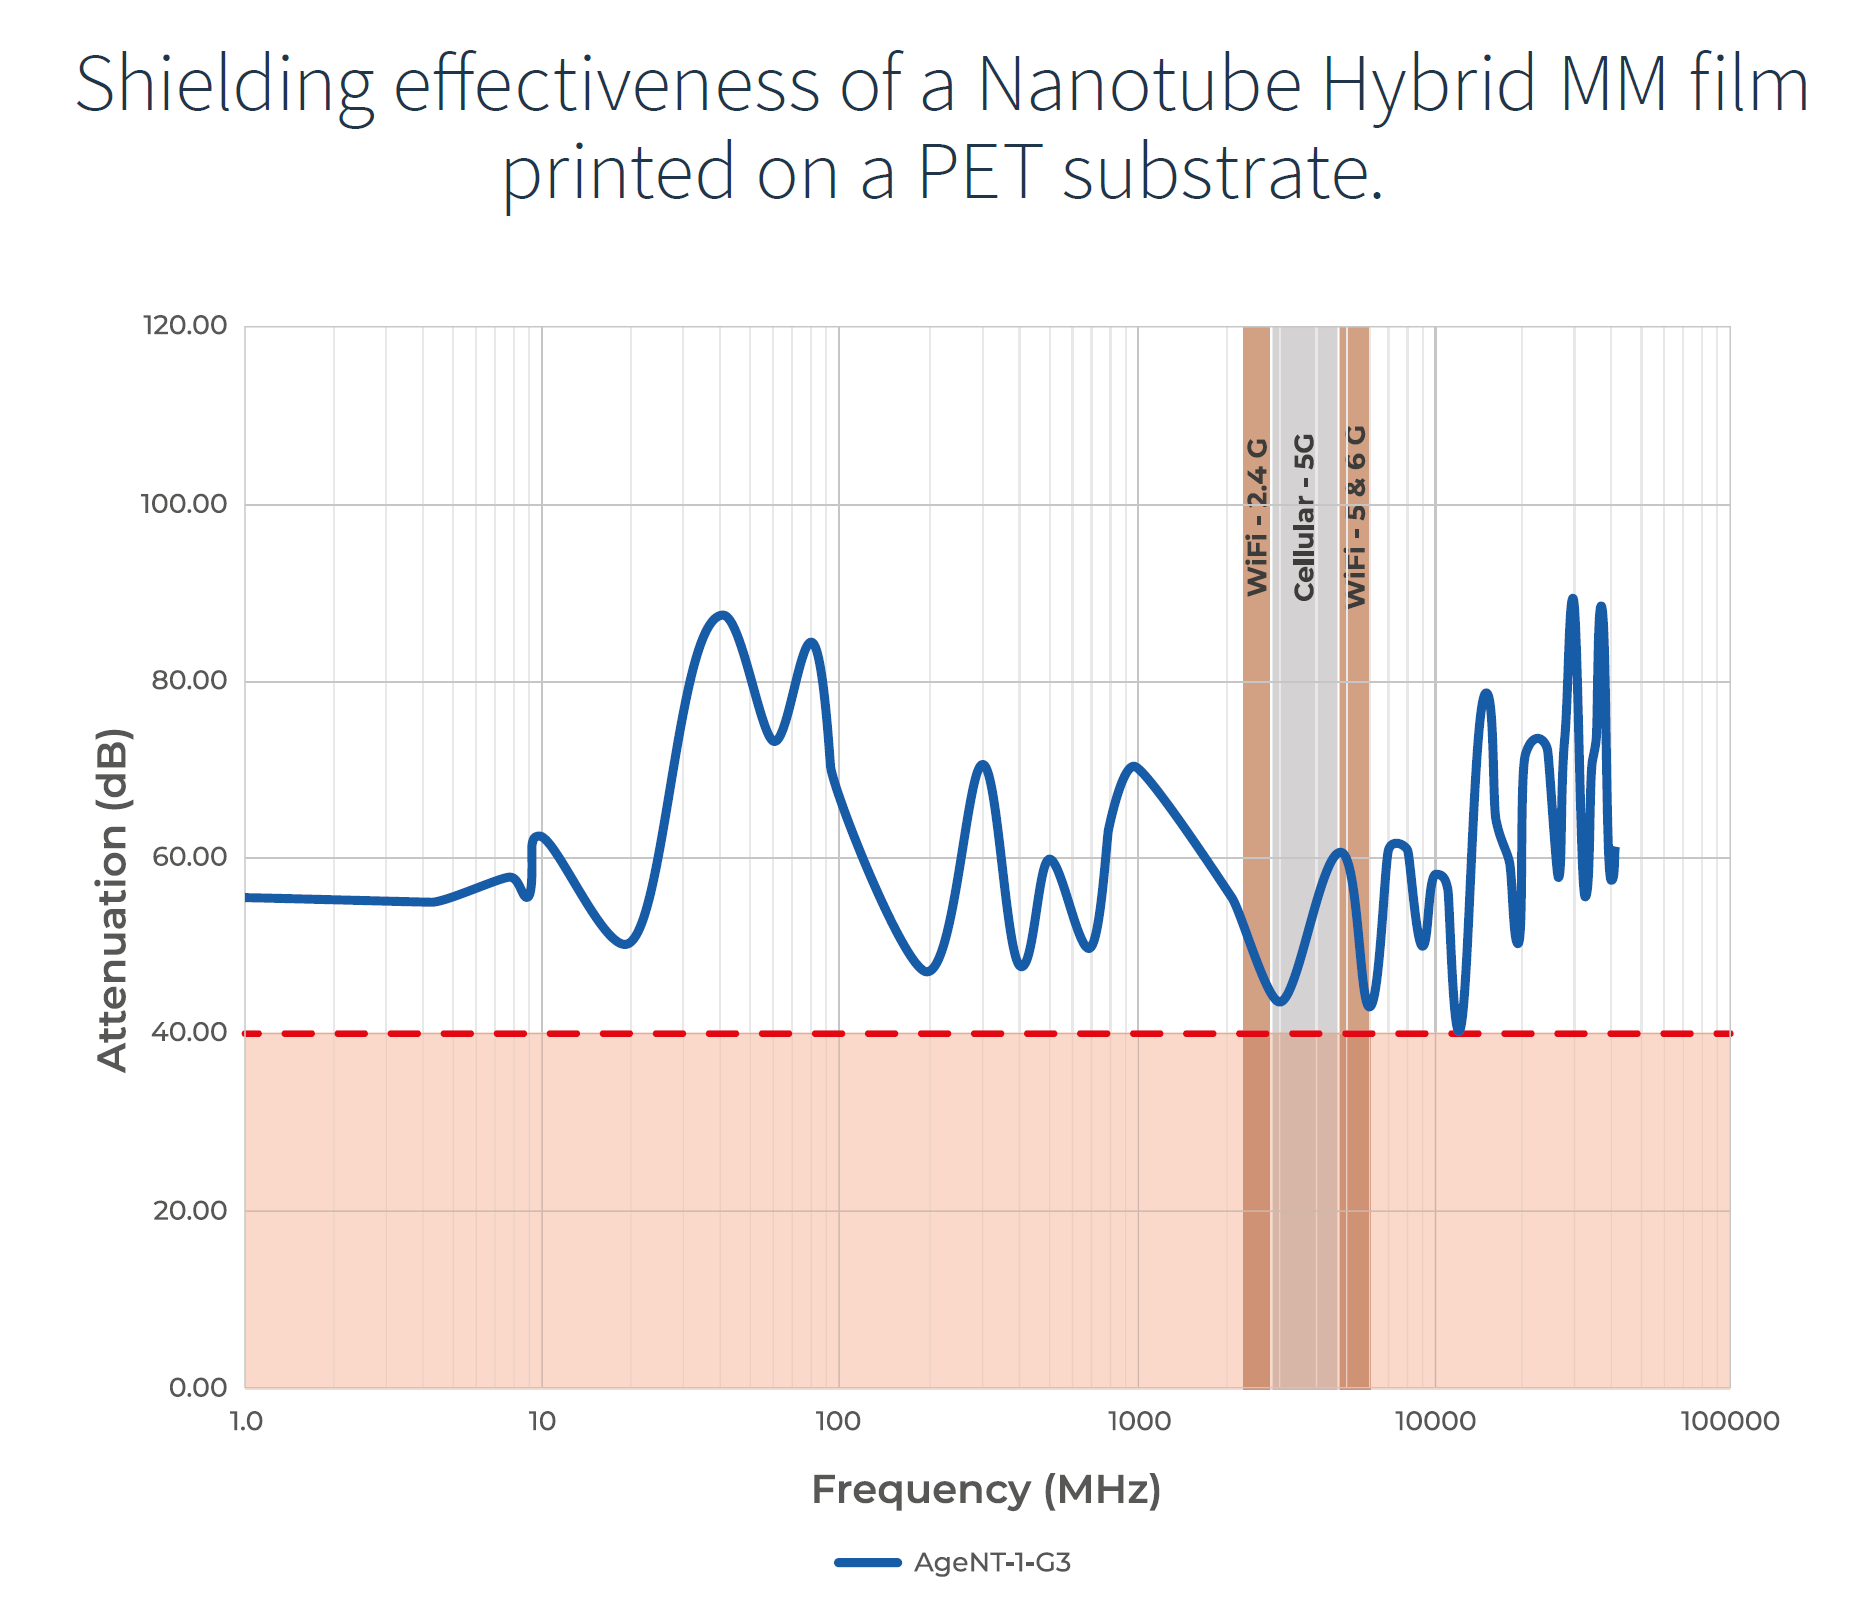 shielding effectiveness of a nanotube hybrid MM film on PET